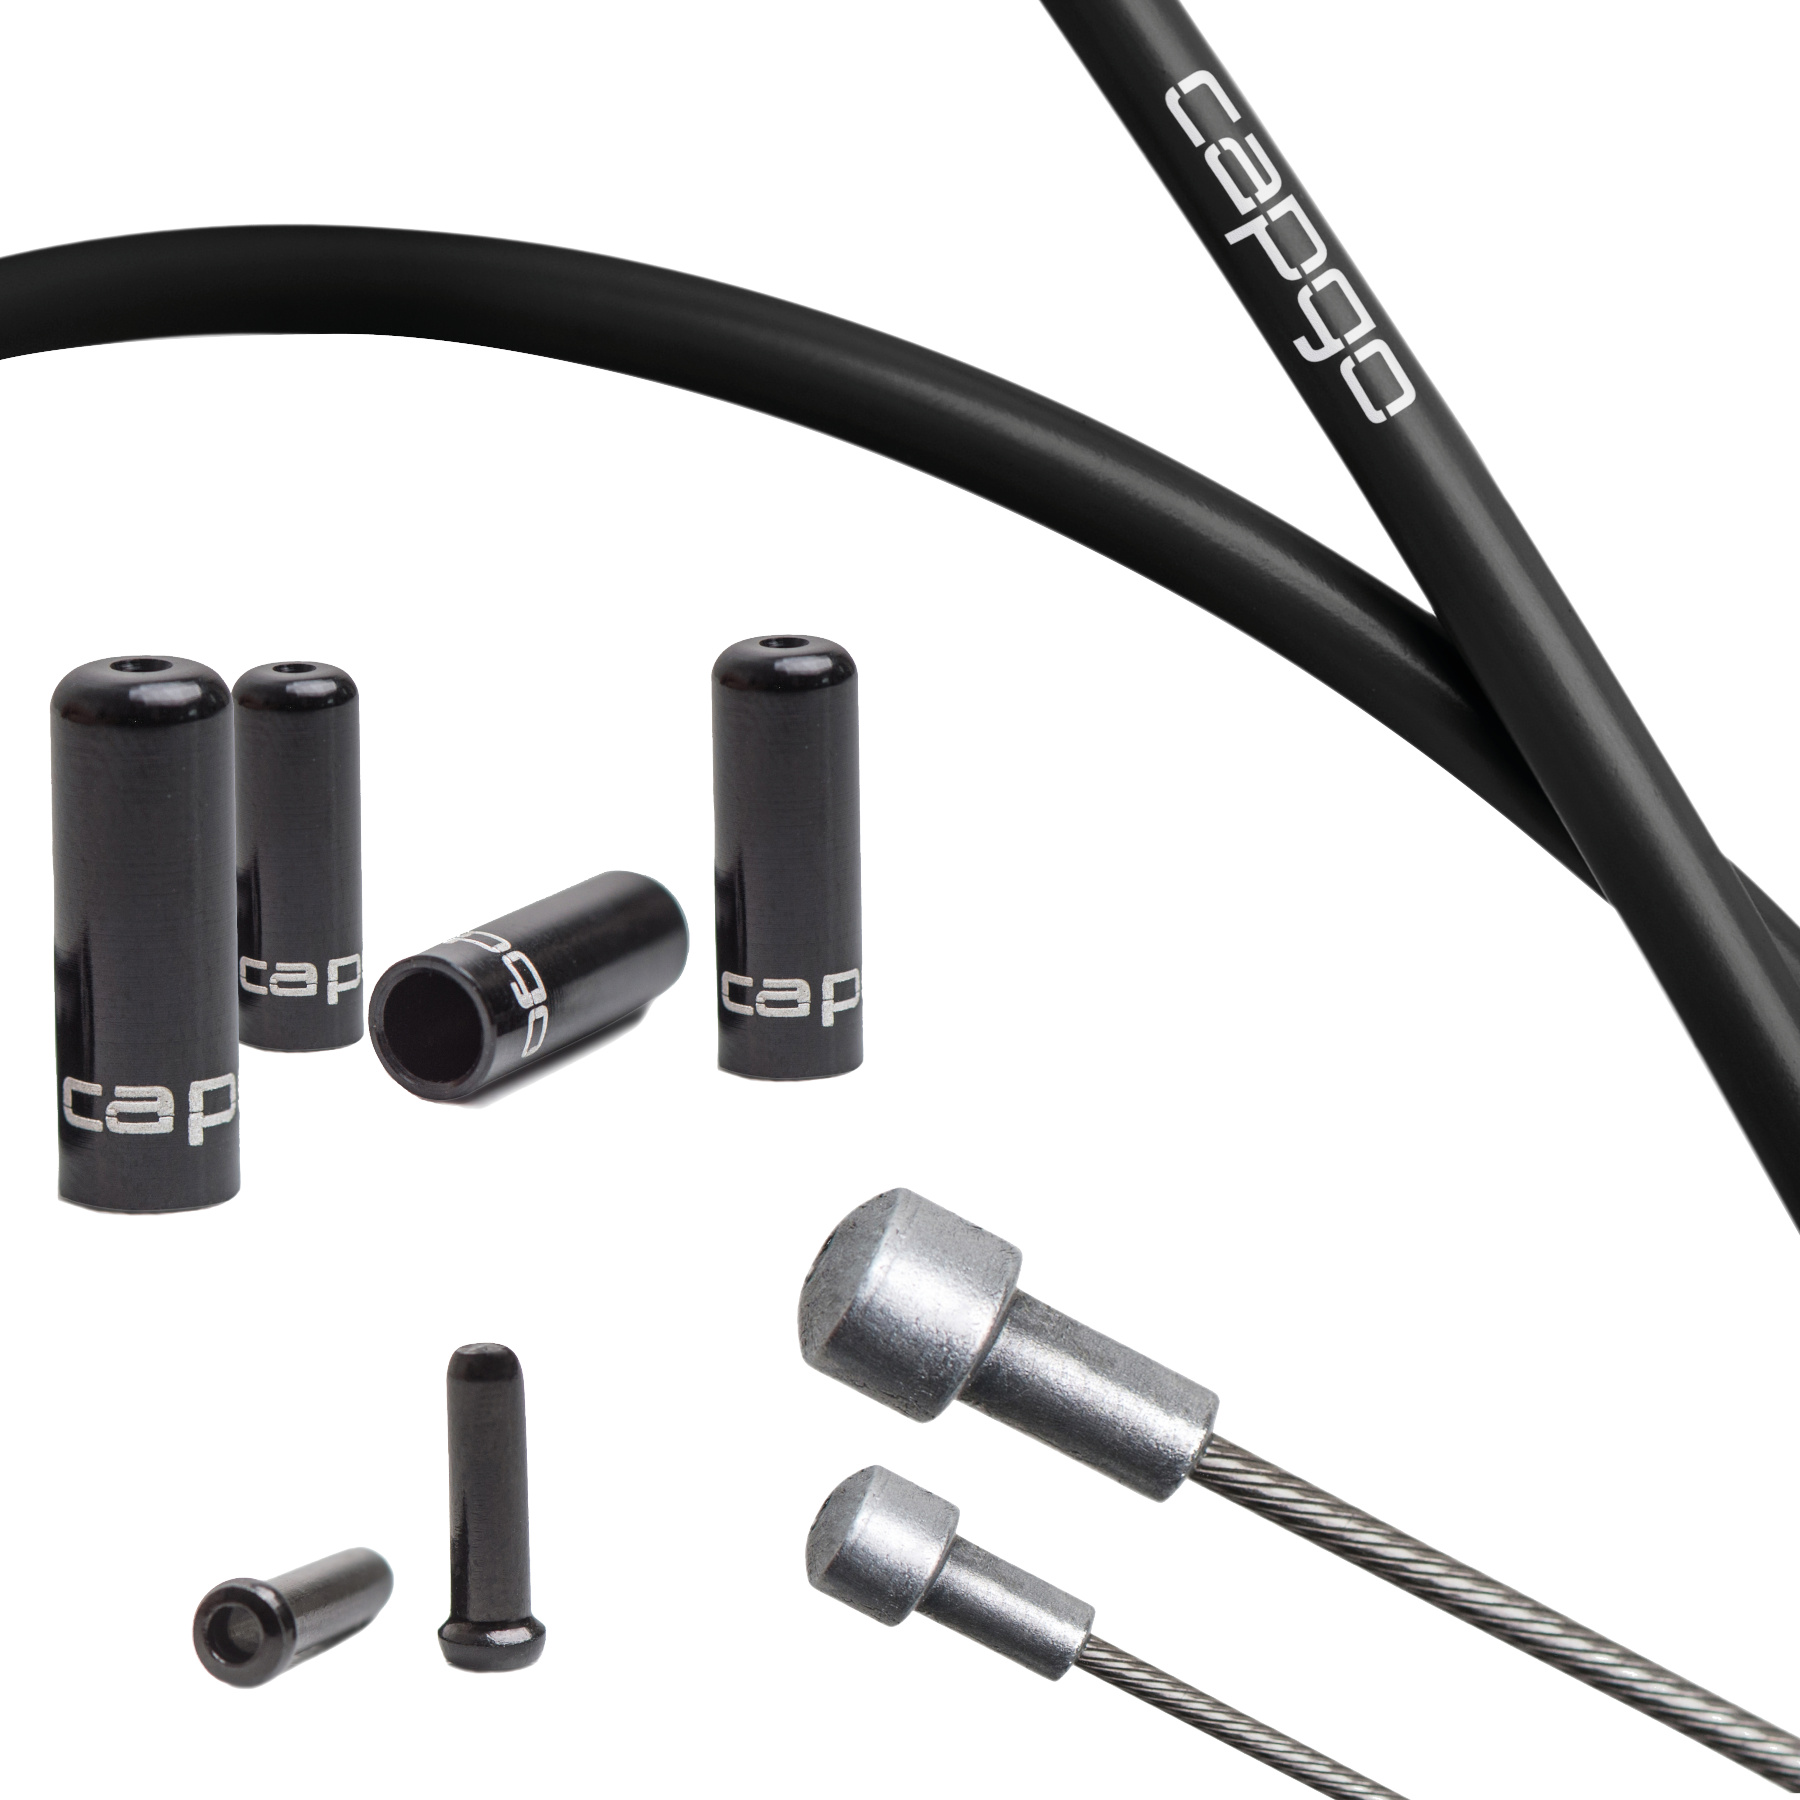 Productfoto van capgo Blue Line Brake Cable Set - Stainless Steel - PTFE - Campagnolo - black